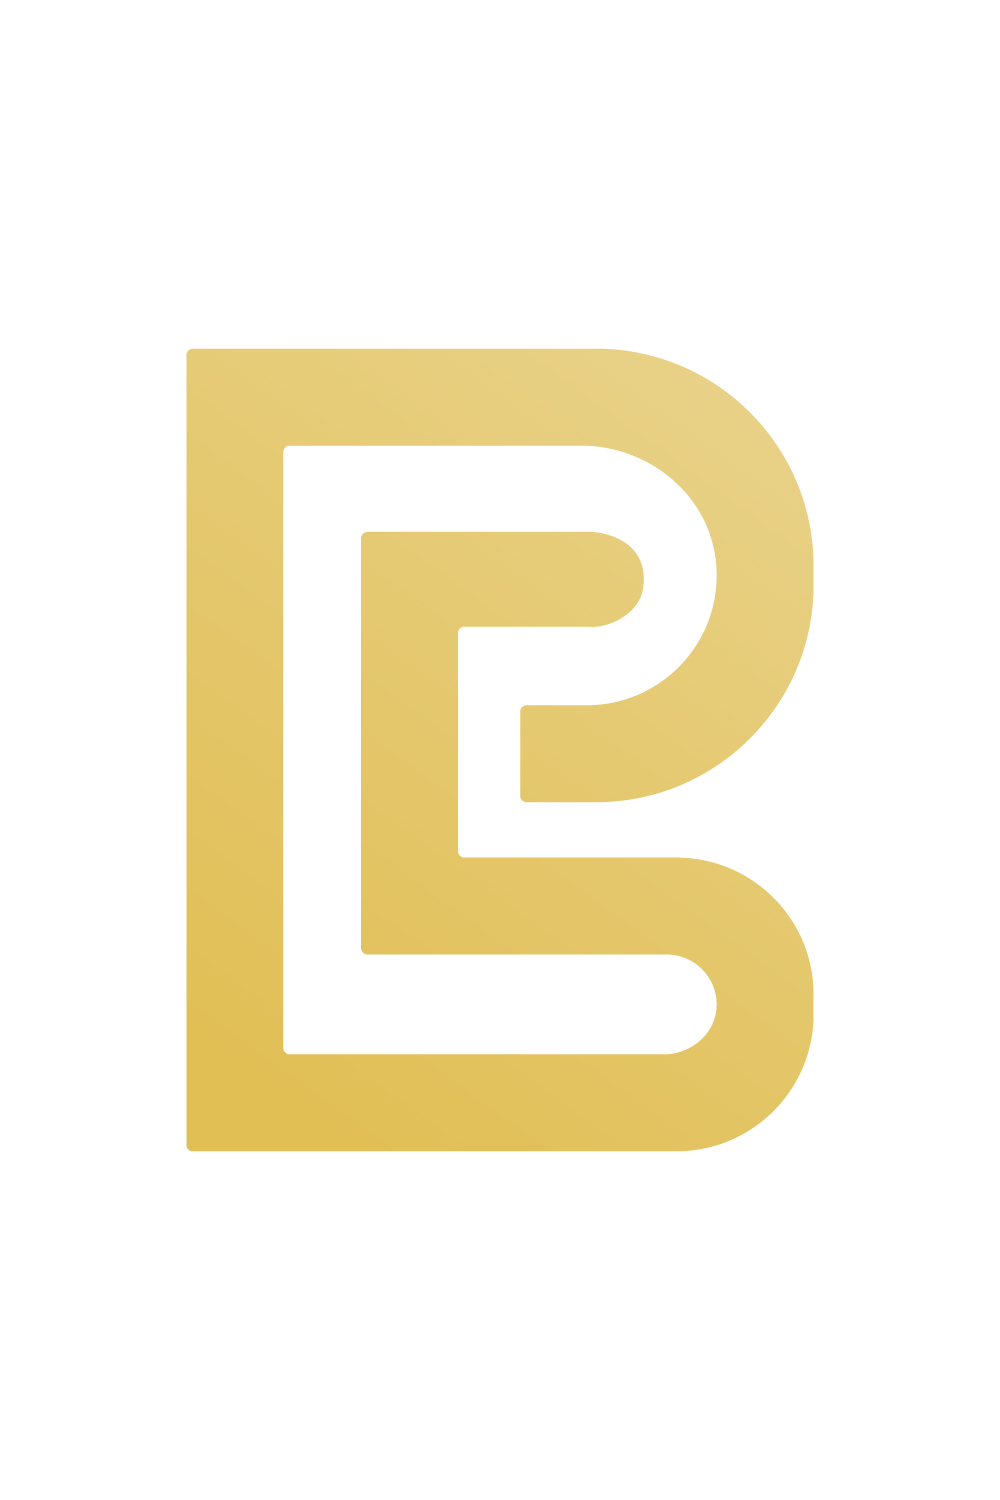 Luxury B letters logo design vector images B Golden color logo best company royalty BP logo monogram best brand icon design pinterest preview image.